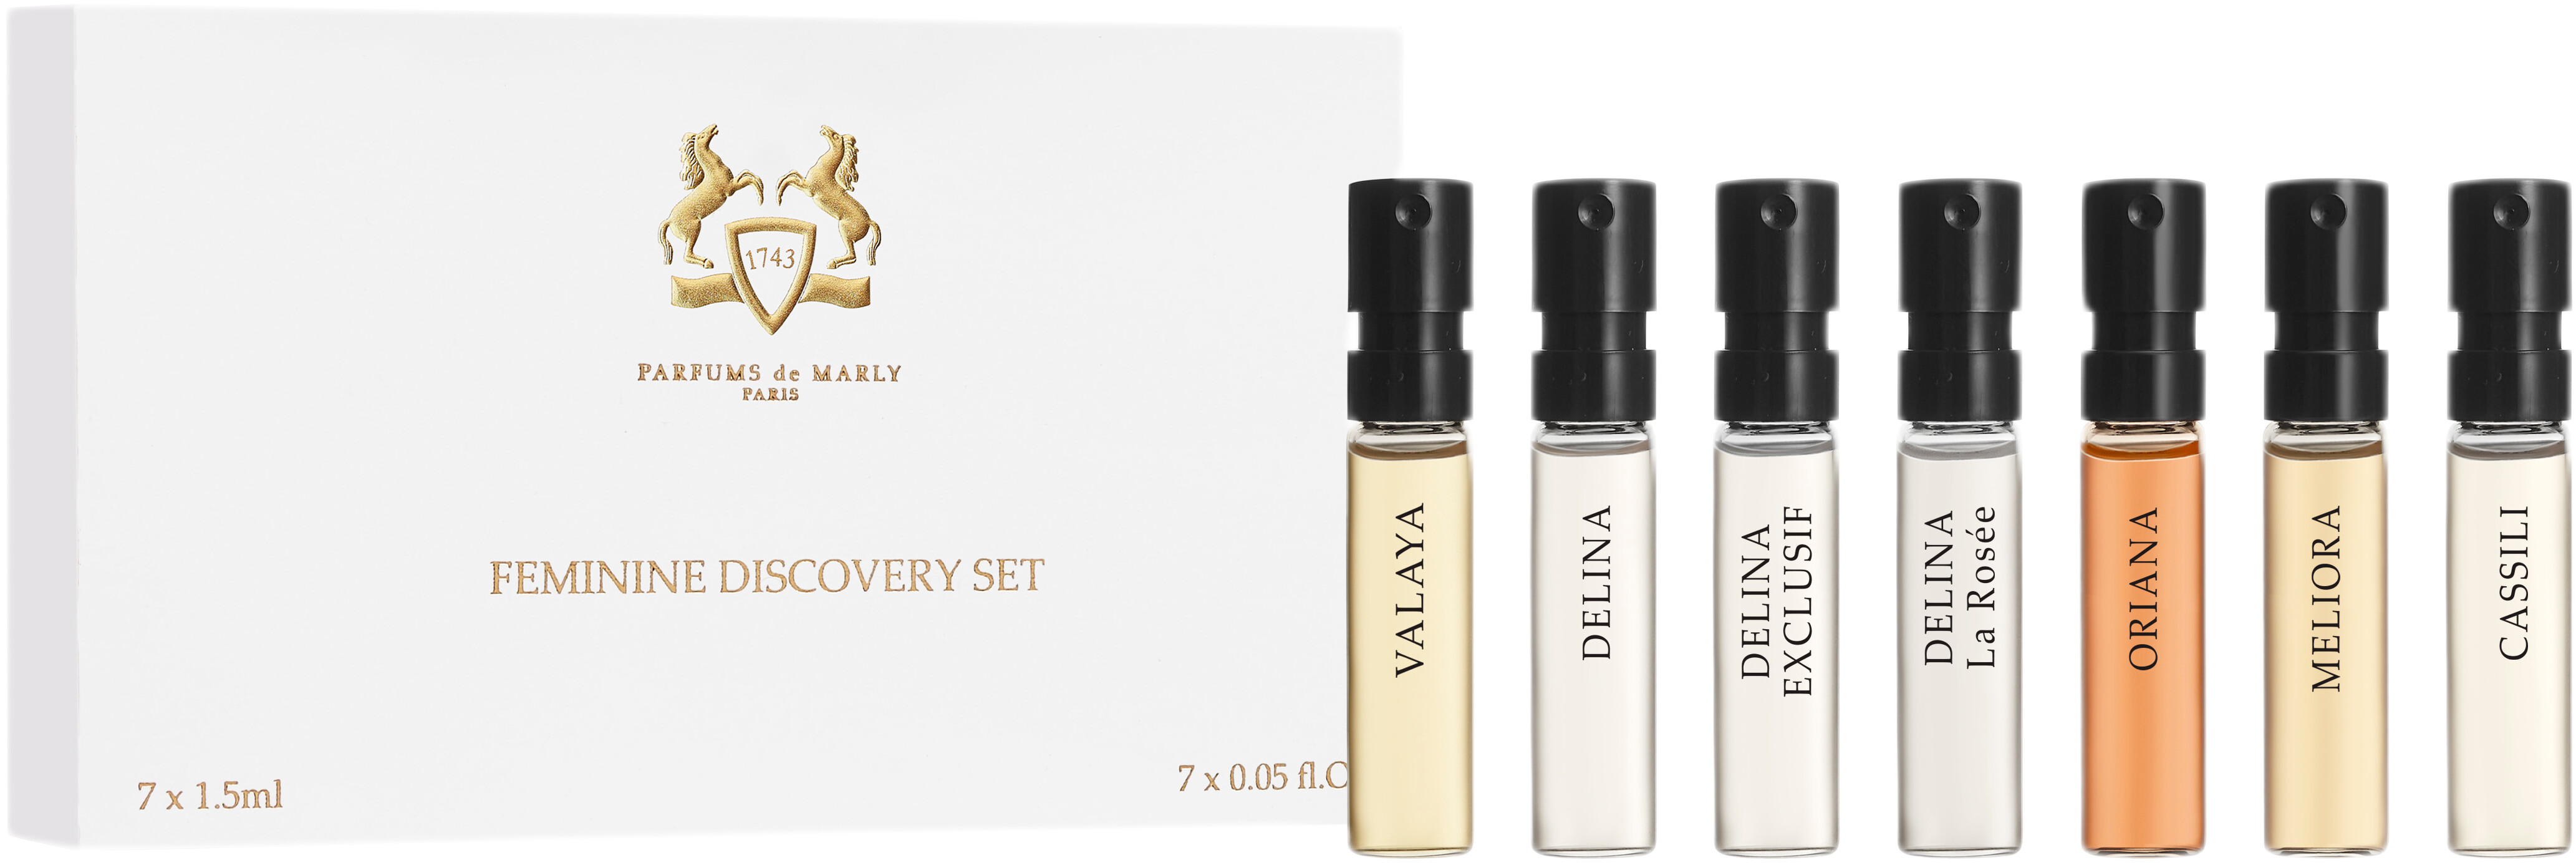 Parfums de Marly Discovery Set Feminine Eau de Parfum 7 x 1.5ml